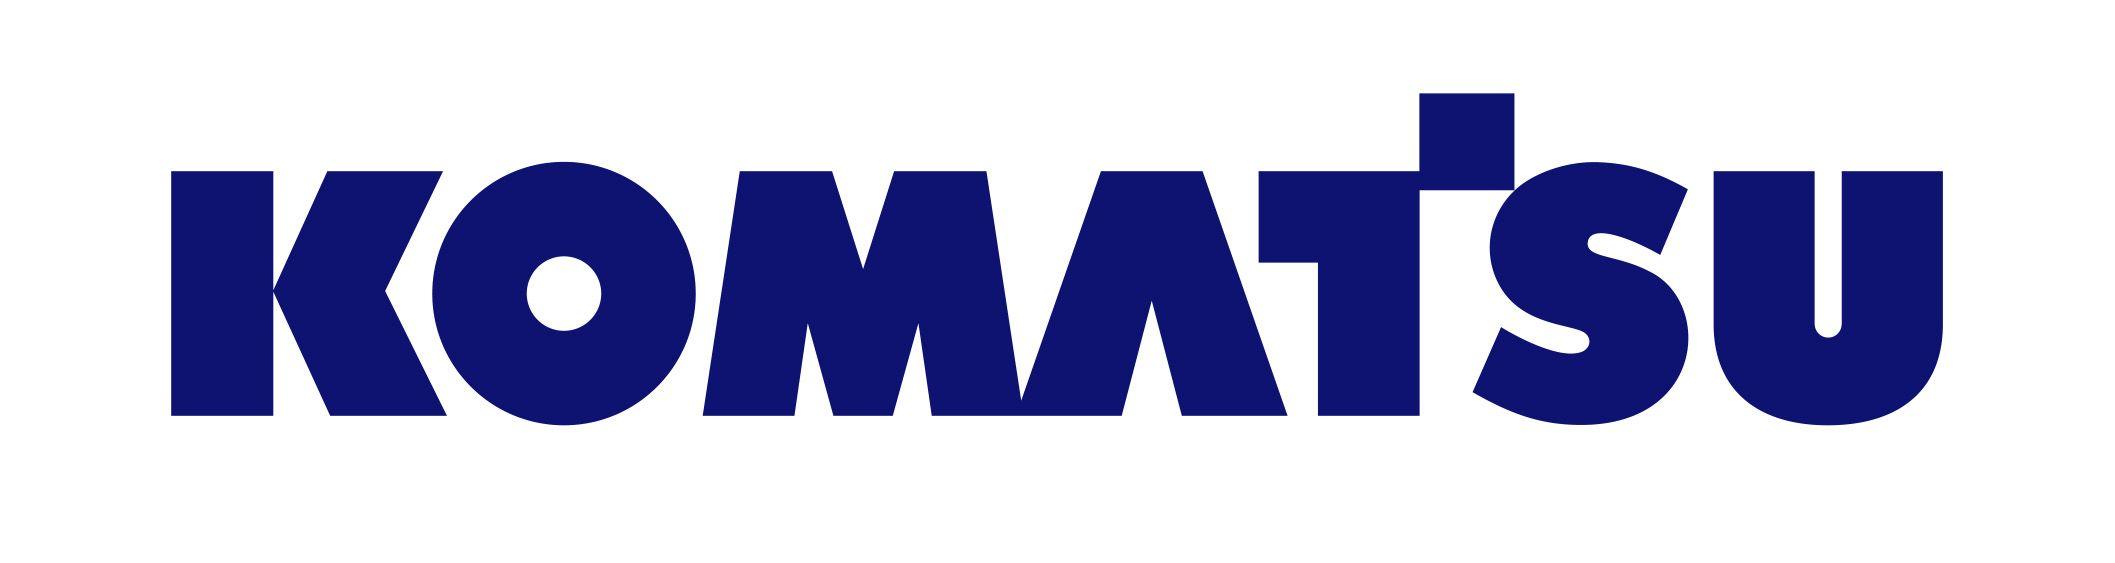 Komatsu Logo - Komatsu Logo Photo - 1 | About of logos